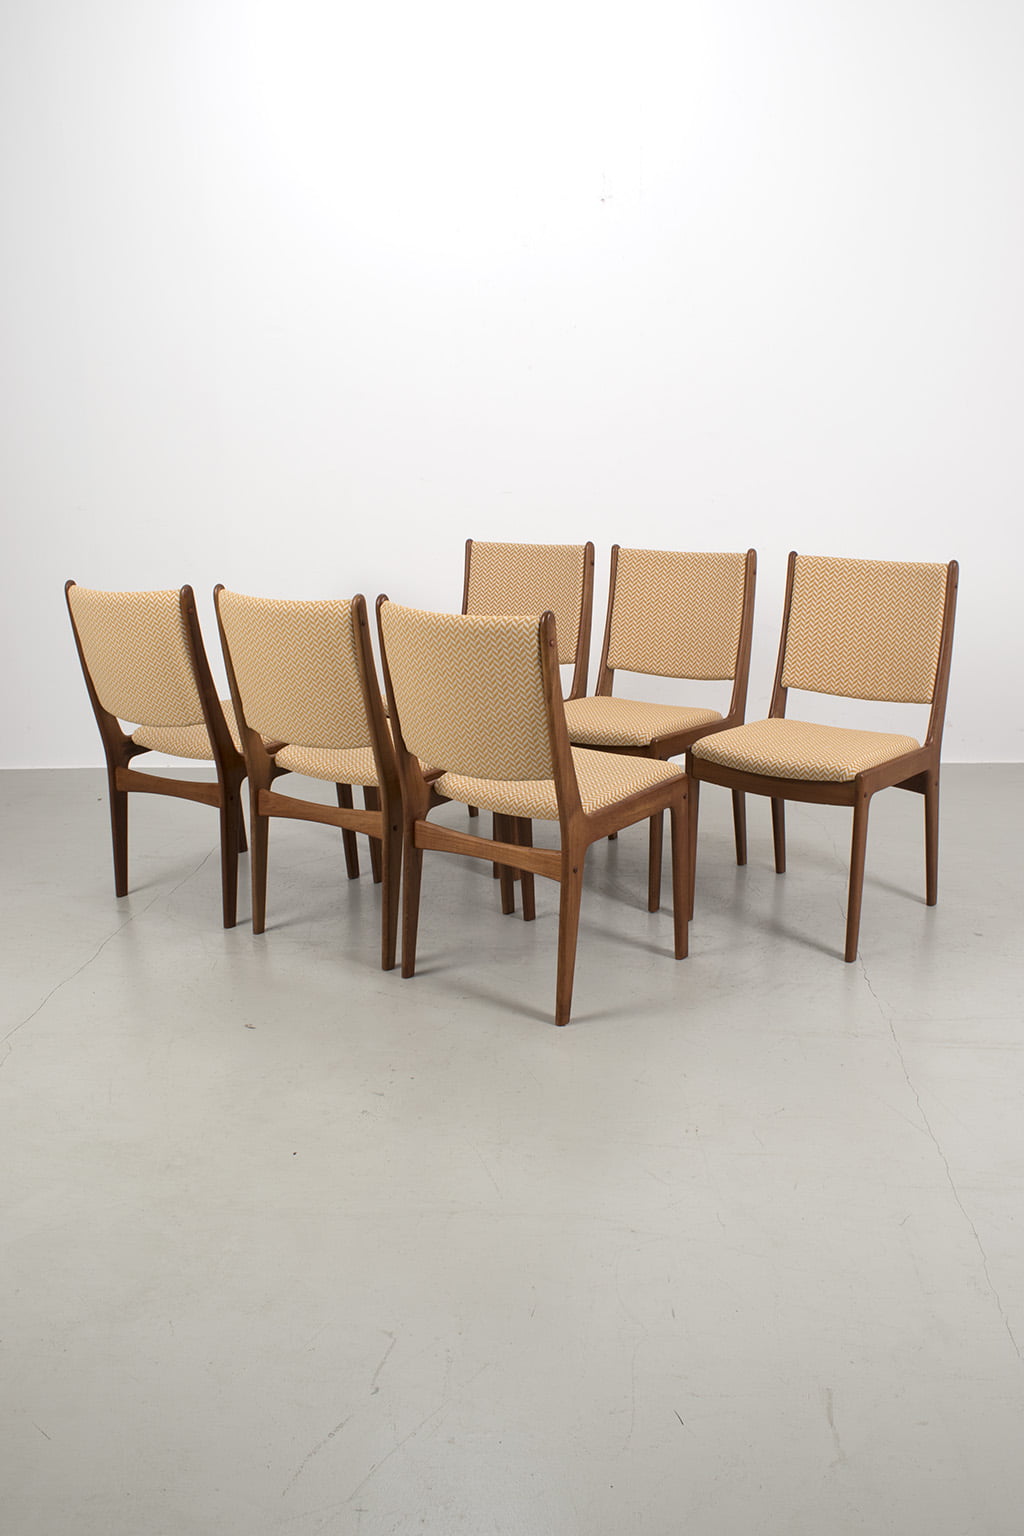 Set Johannes Andersen chairs